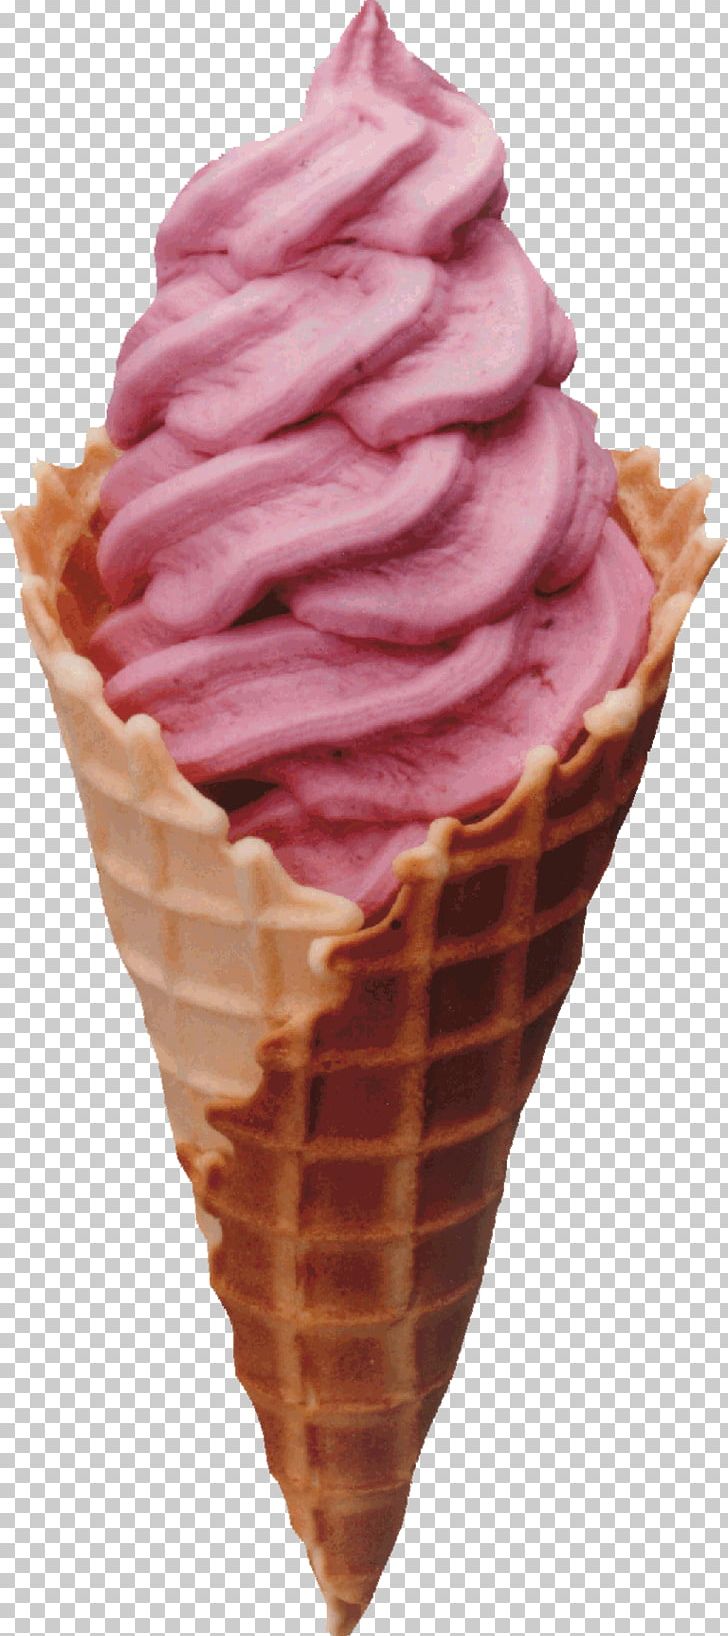 Ice Cream Cones Portable Network Graphics Frozen Yogurt PNG, Clipart, Chocolate Ice Cream, Cream, Dairy Product, Dessert, Dondurma Free PNG Download